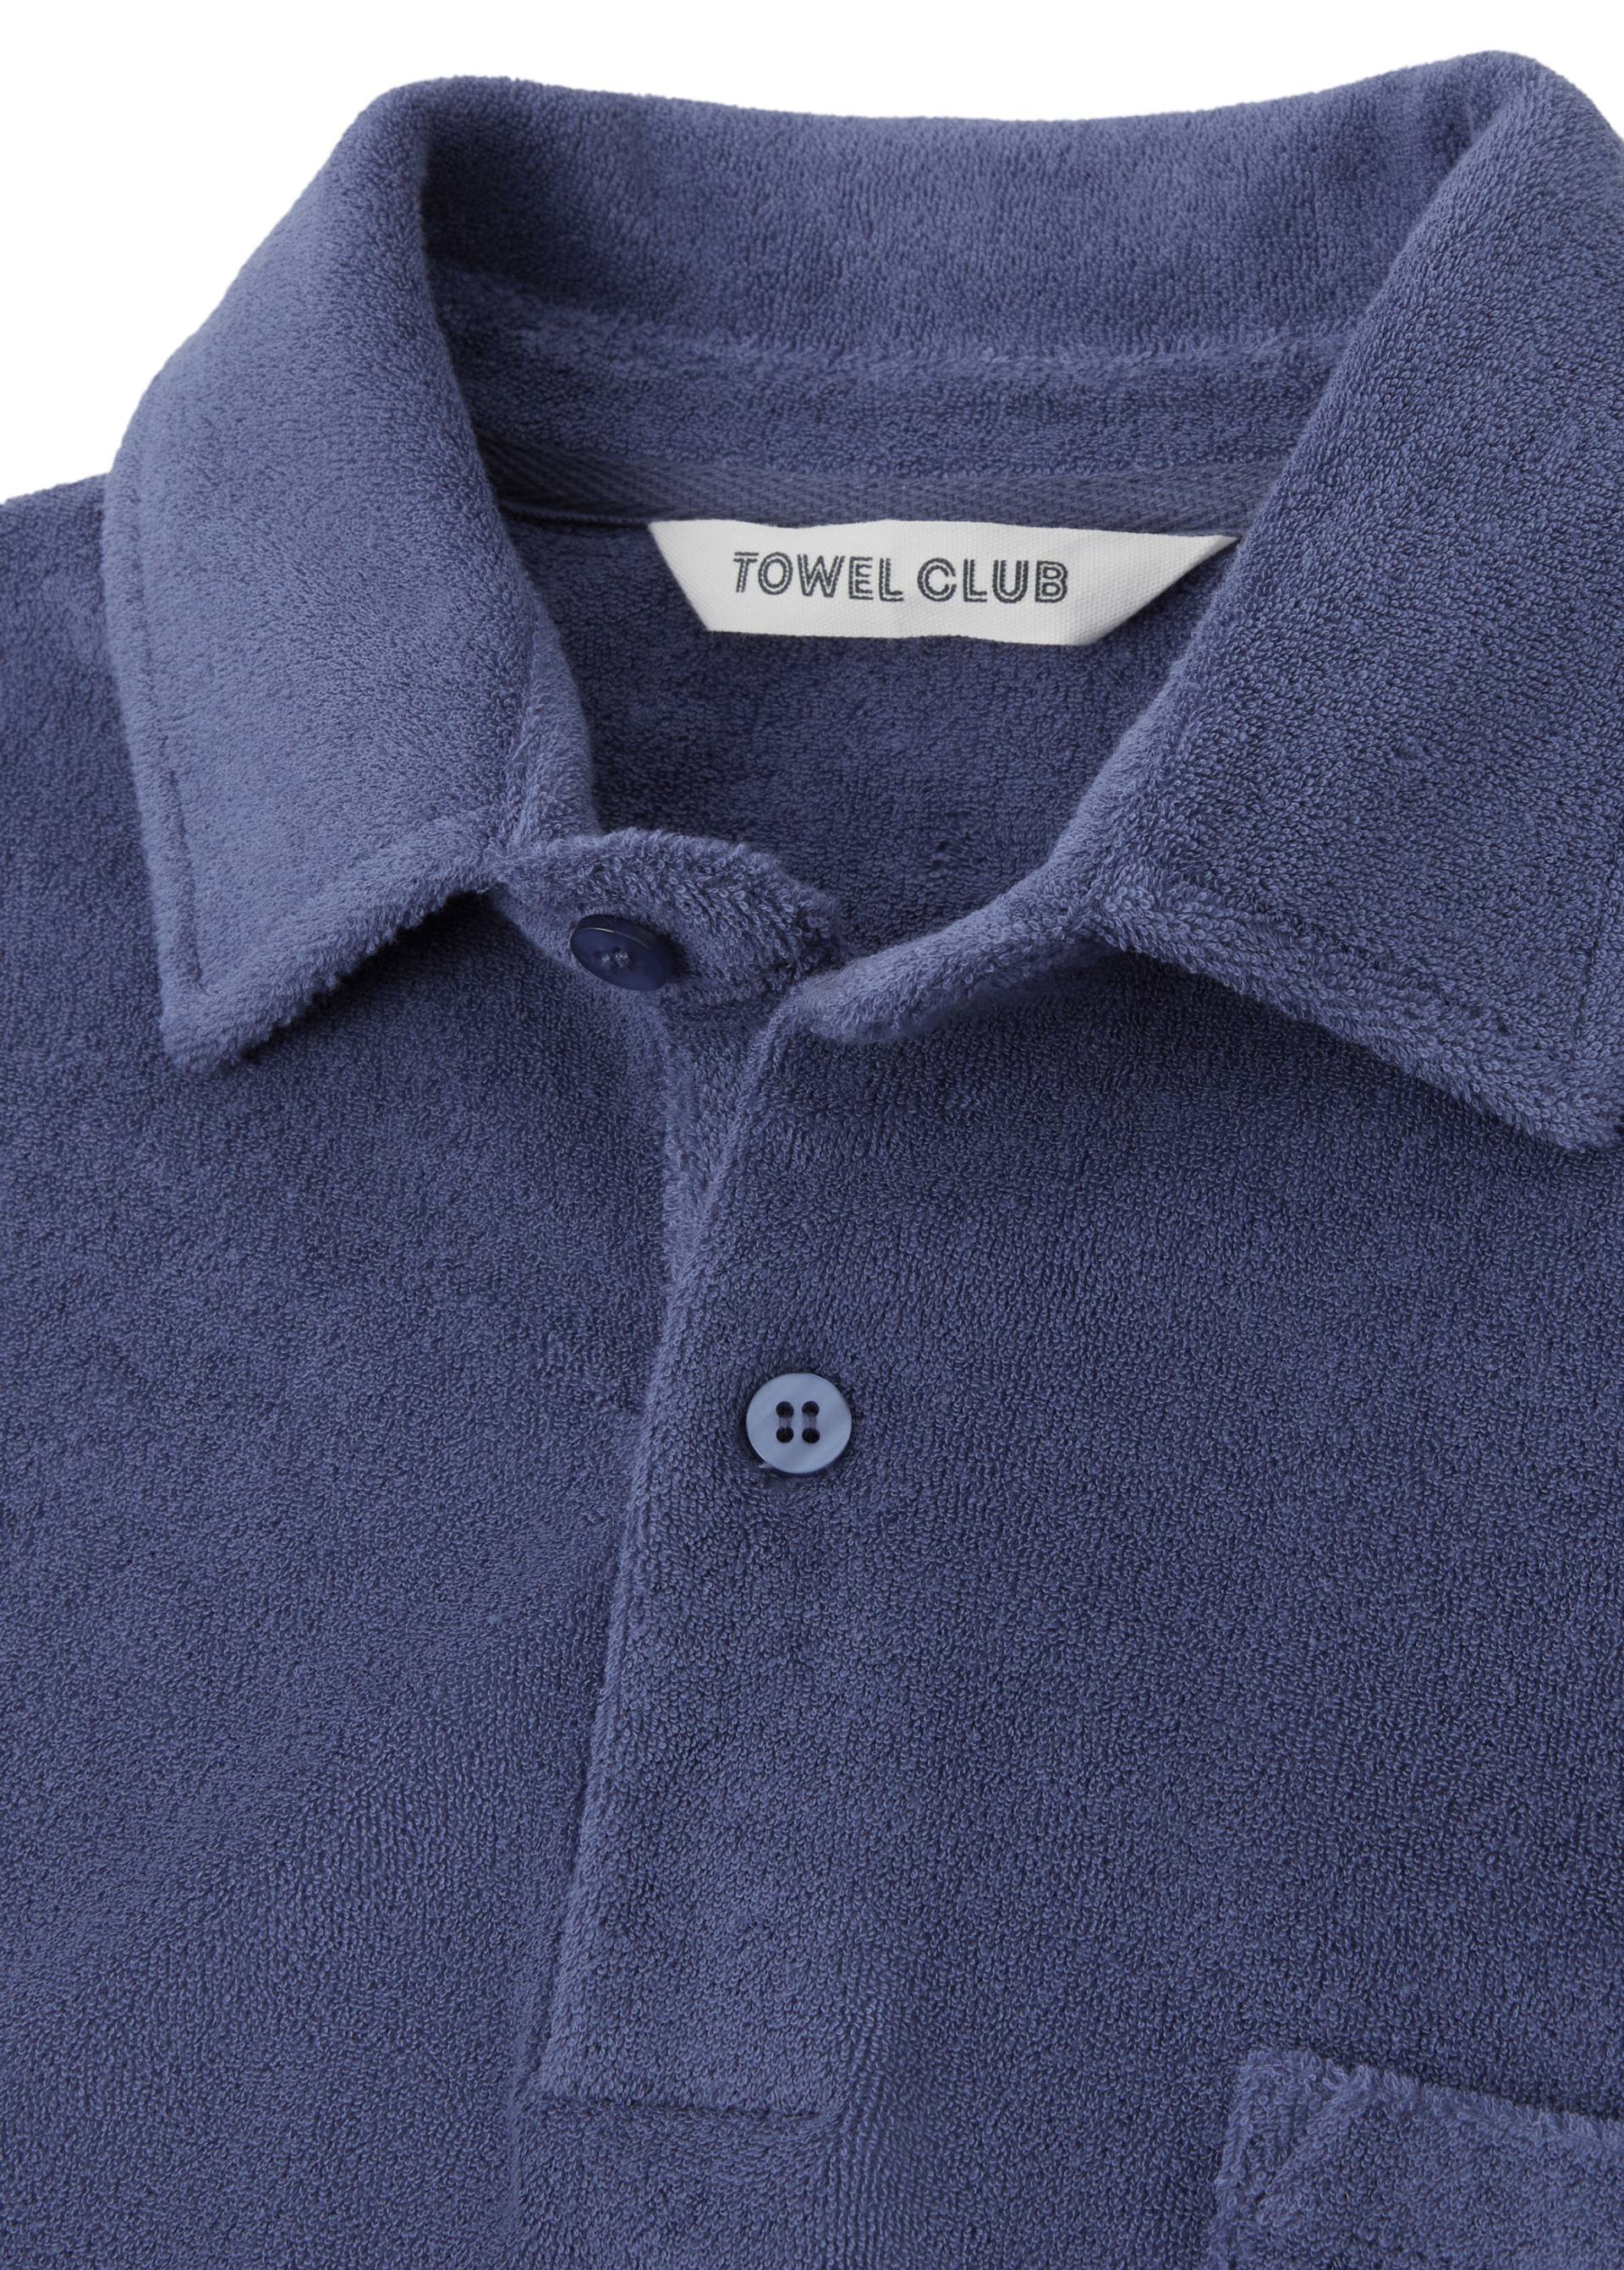 Towel Club Towel Club Longsleeve Polo Shirt Dusty Navy - 3